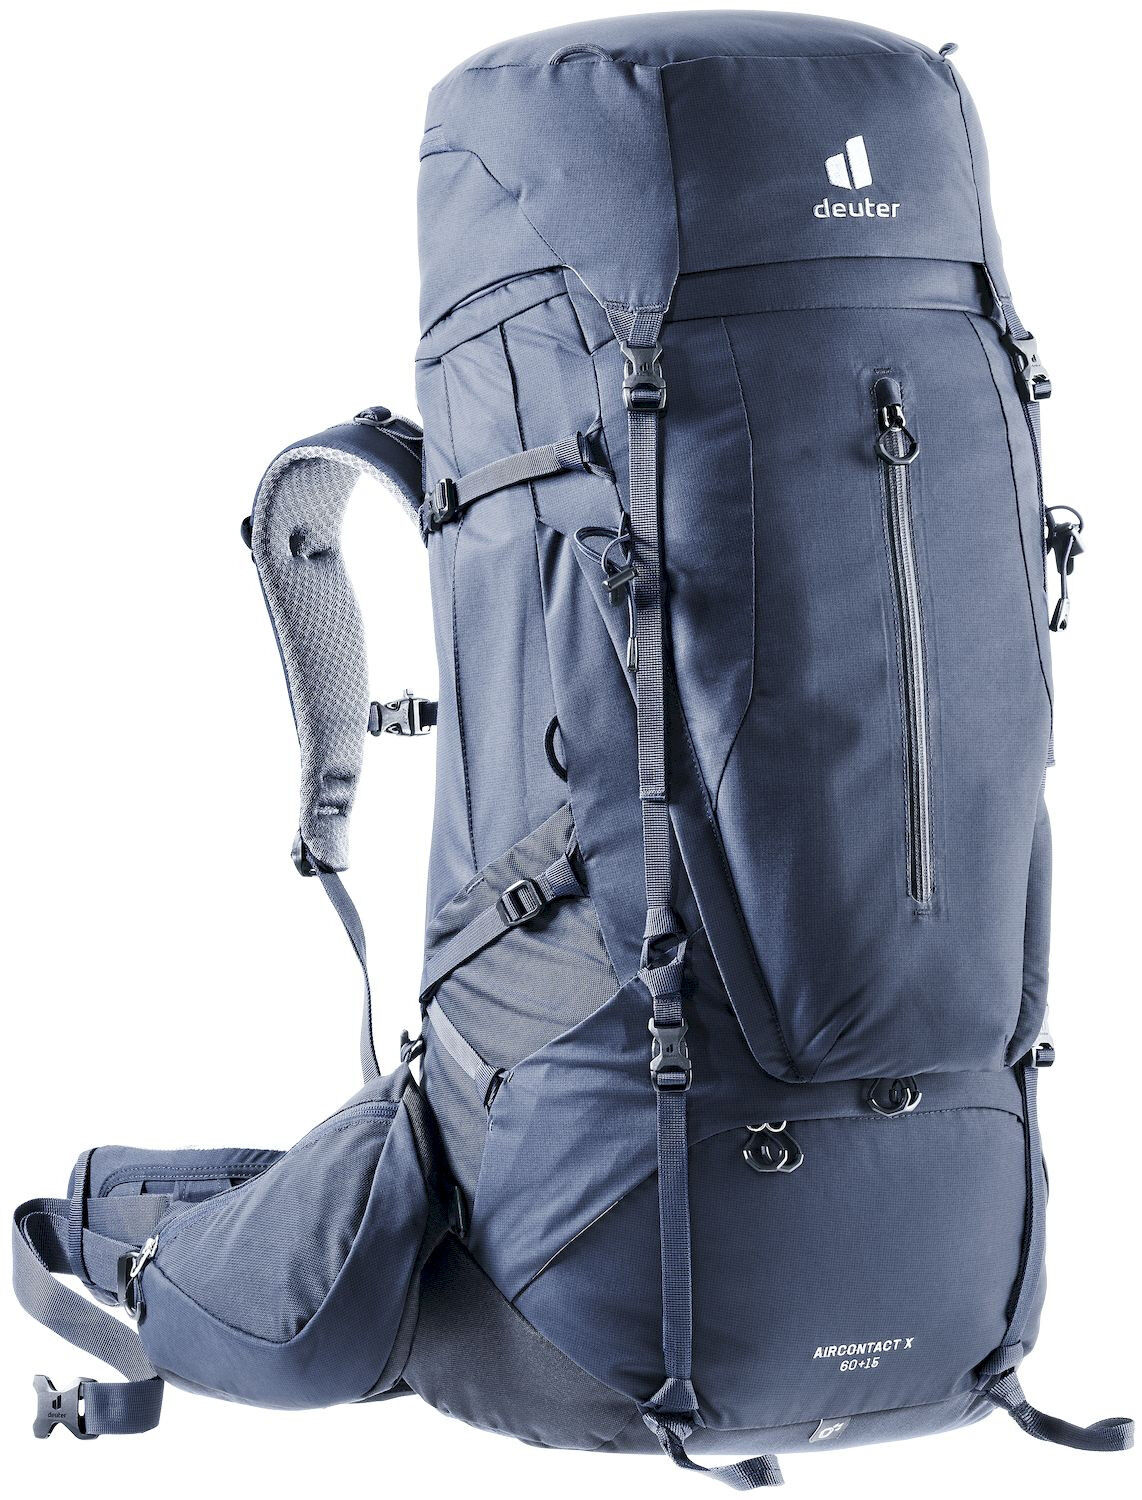 Deuter Aircontact X 60+15 - Hiking backpack - Men's